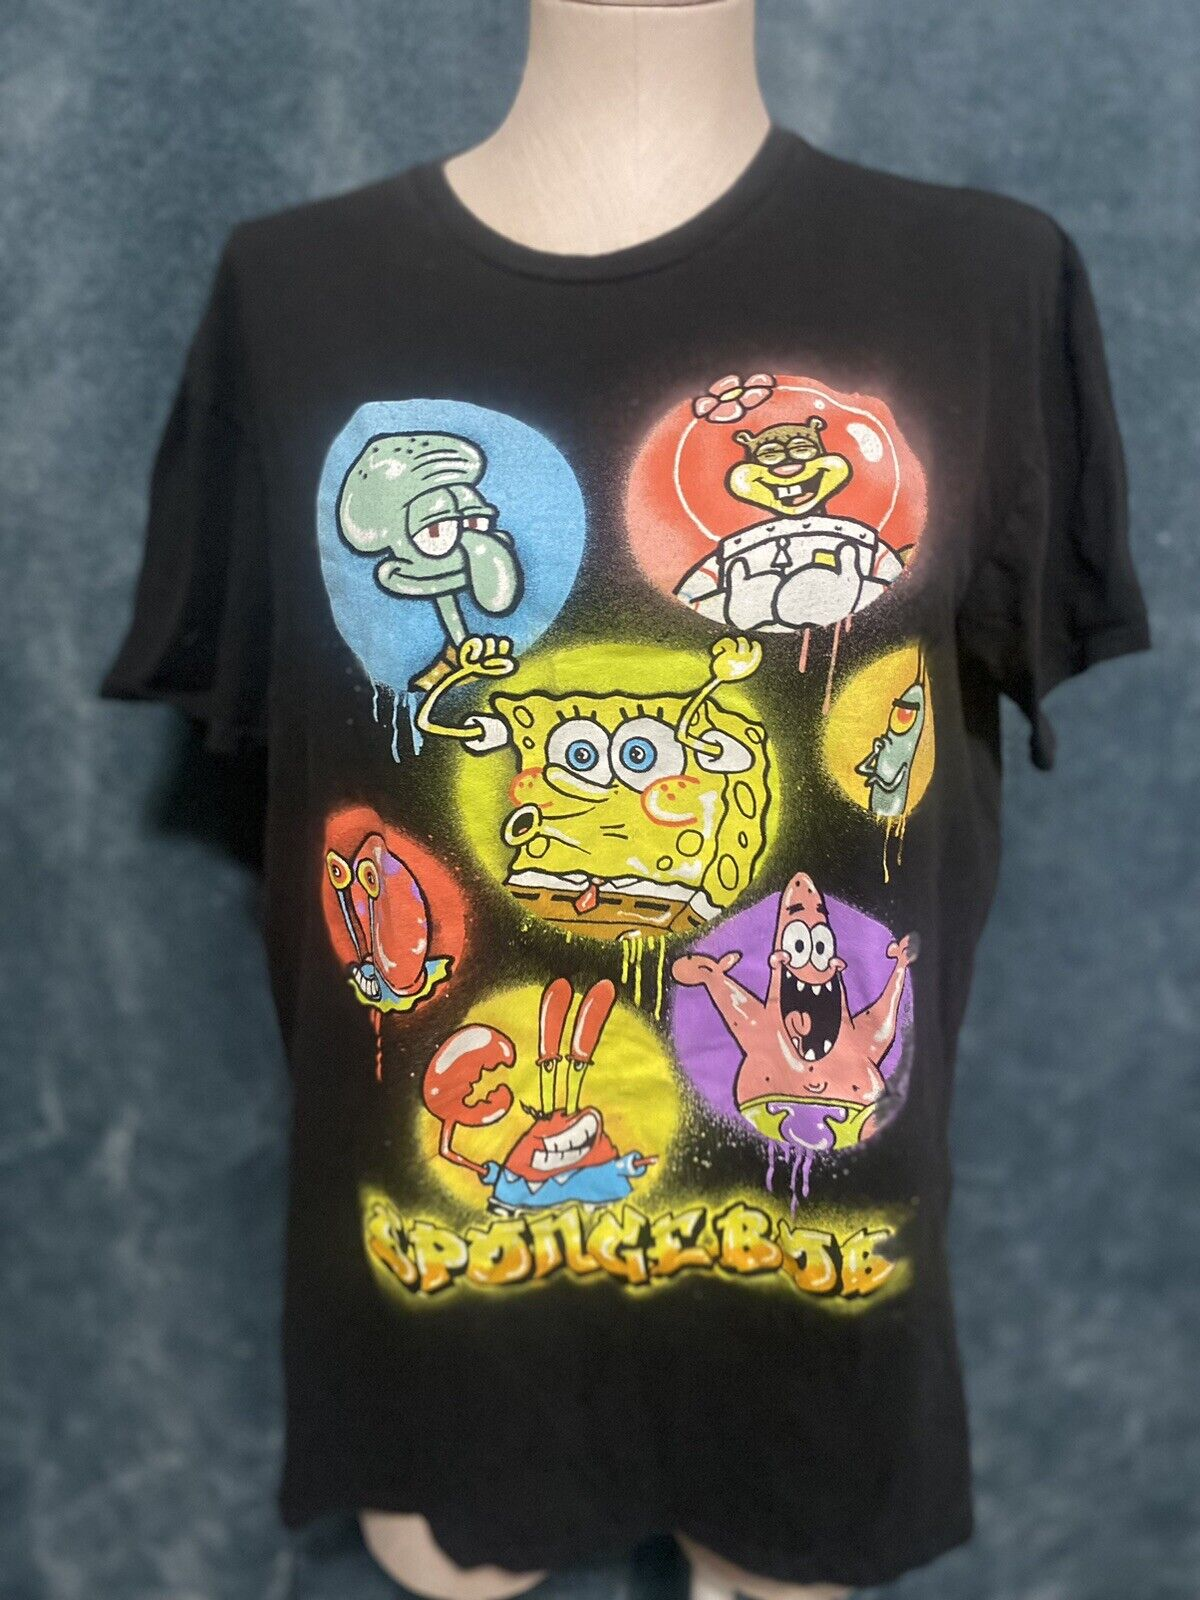 High Quality Nickelodeon SPONGEBOB and Friends Graffiti T-Shirt Black Size La Blank Meme Template